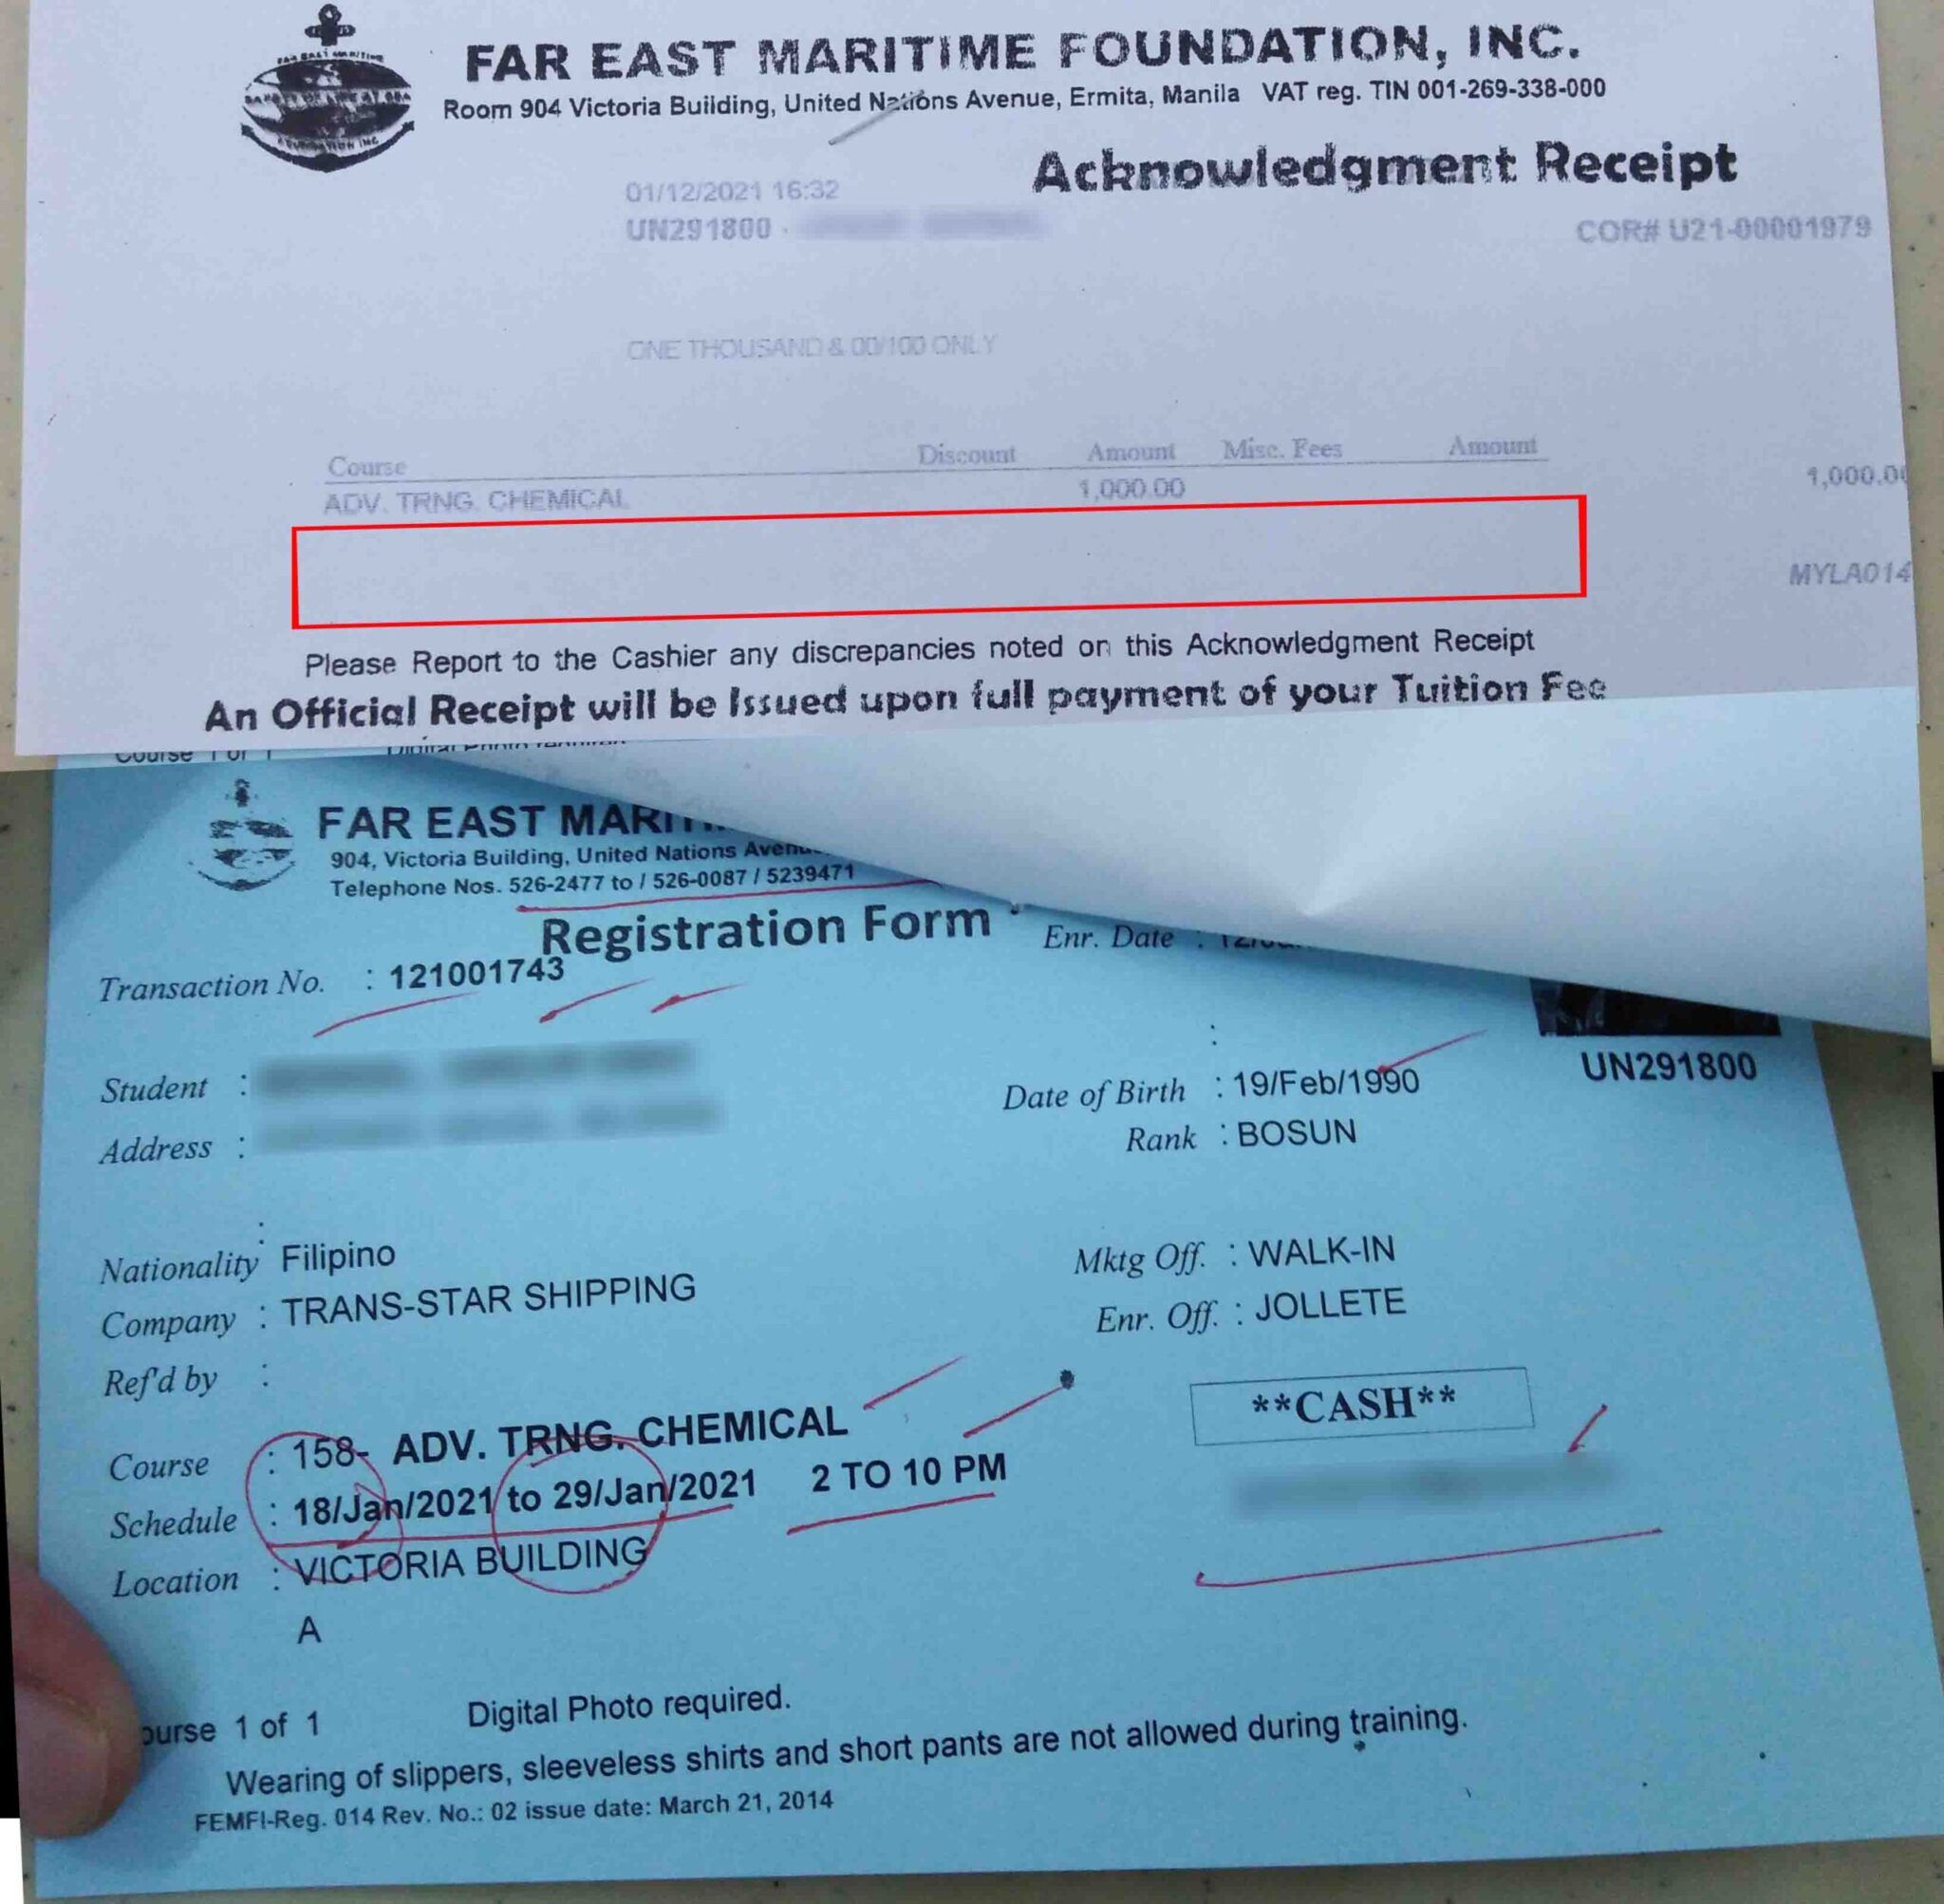 FEMFI Acknowledgement Receipt and Registration form